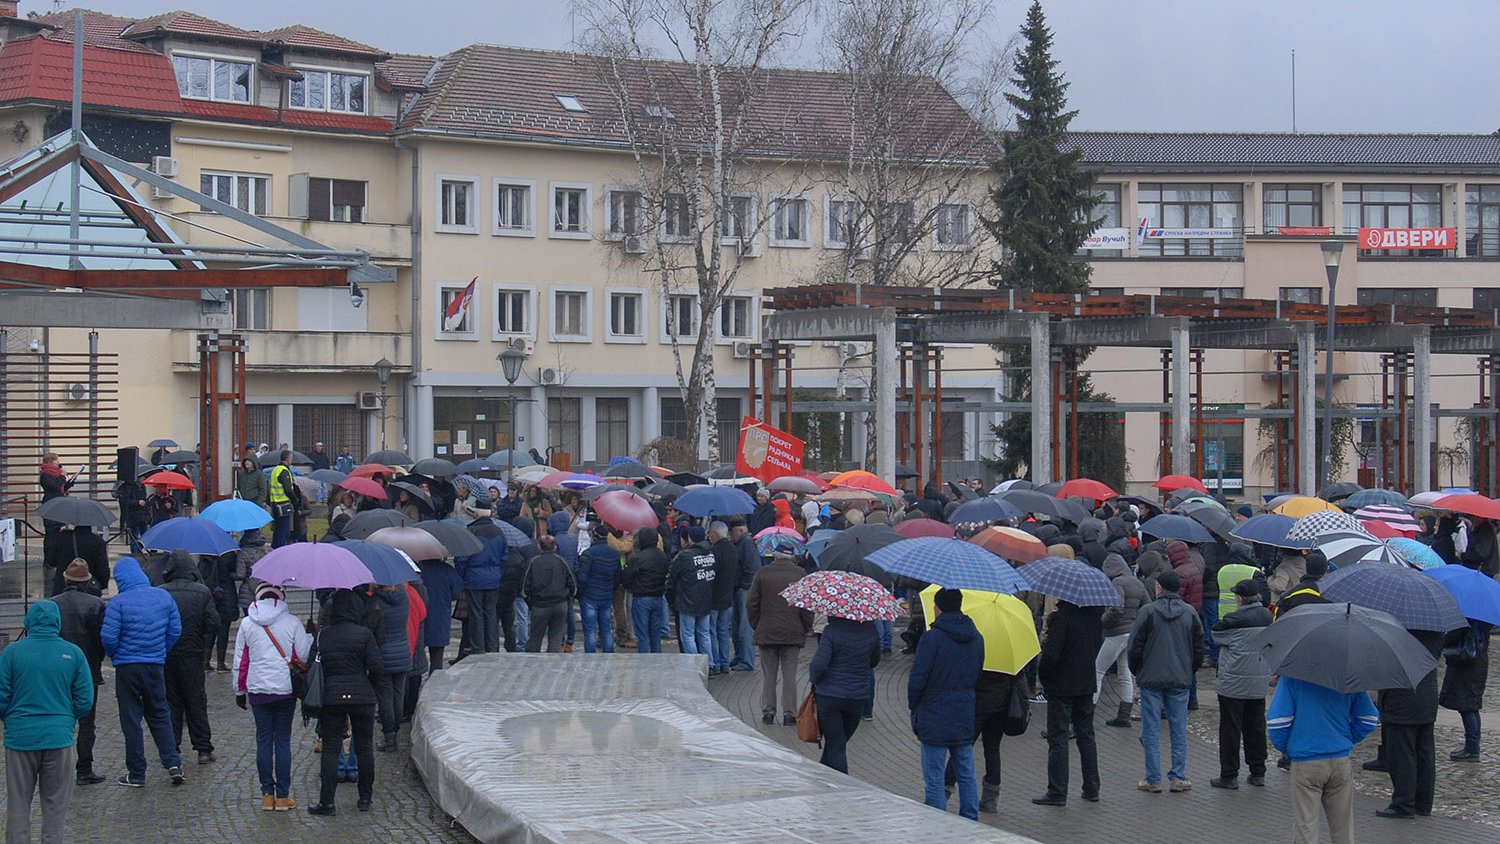 Građani Požege ne odustaju od protesta protiv lokalne vlasti 1